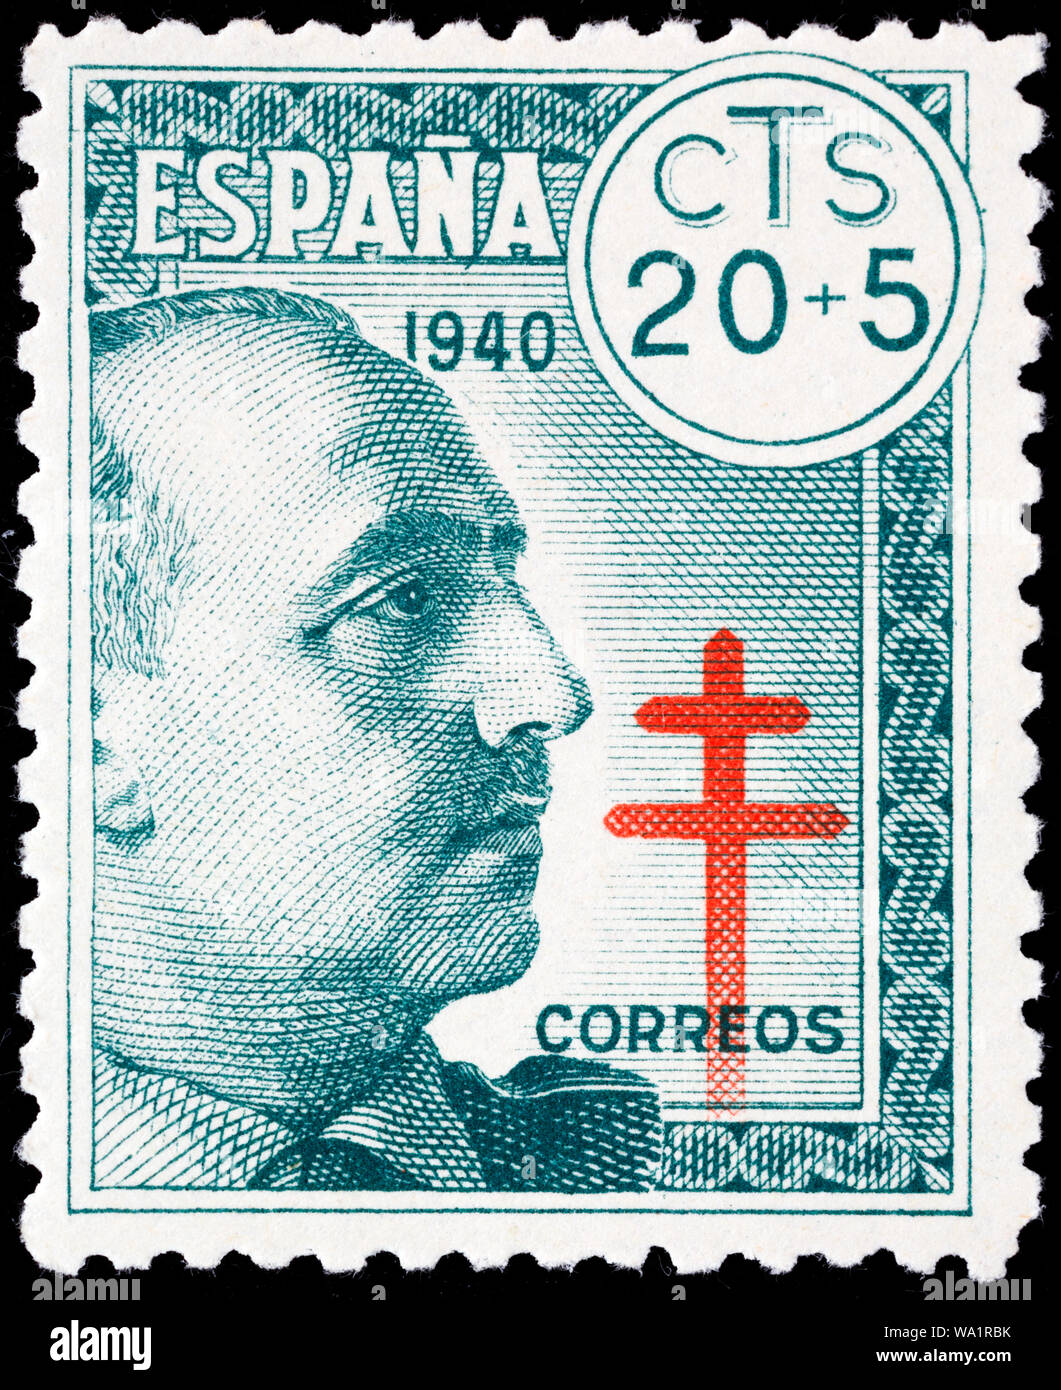 Francisco Franco Bahamonde (1892-1975), Spanish general, politician, Head of State, dictator, Caudillo, Cross of Lorraine, postage stamp, Spain, 1940 Stock Photo